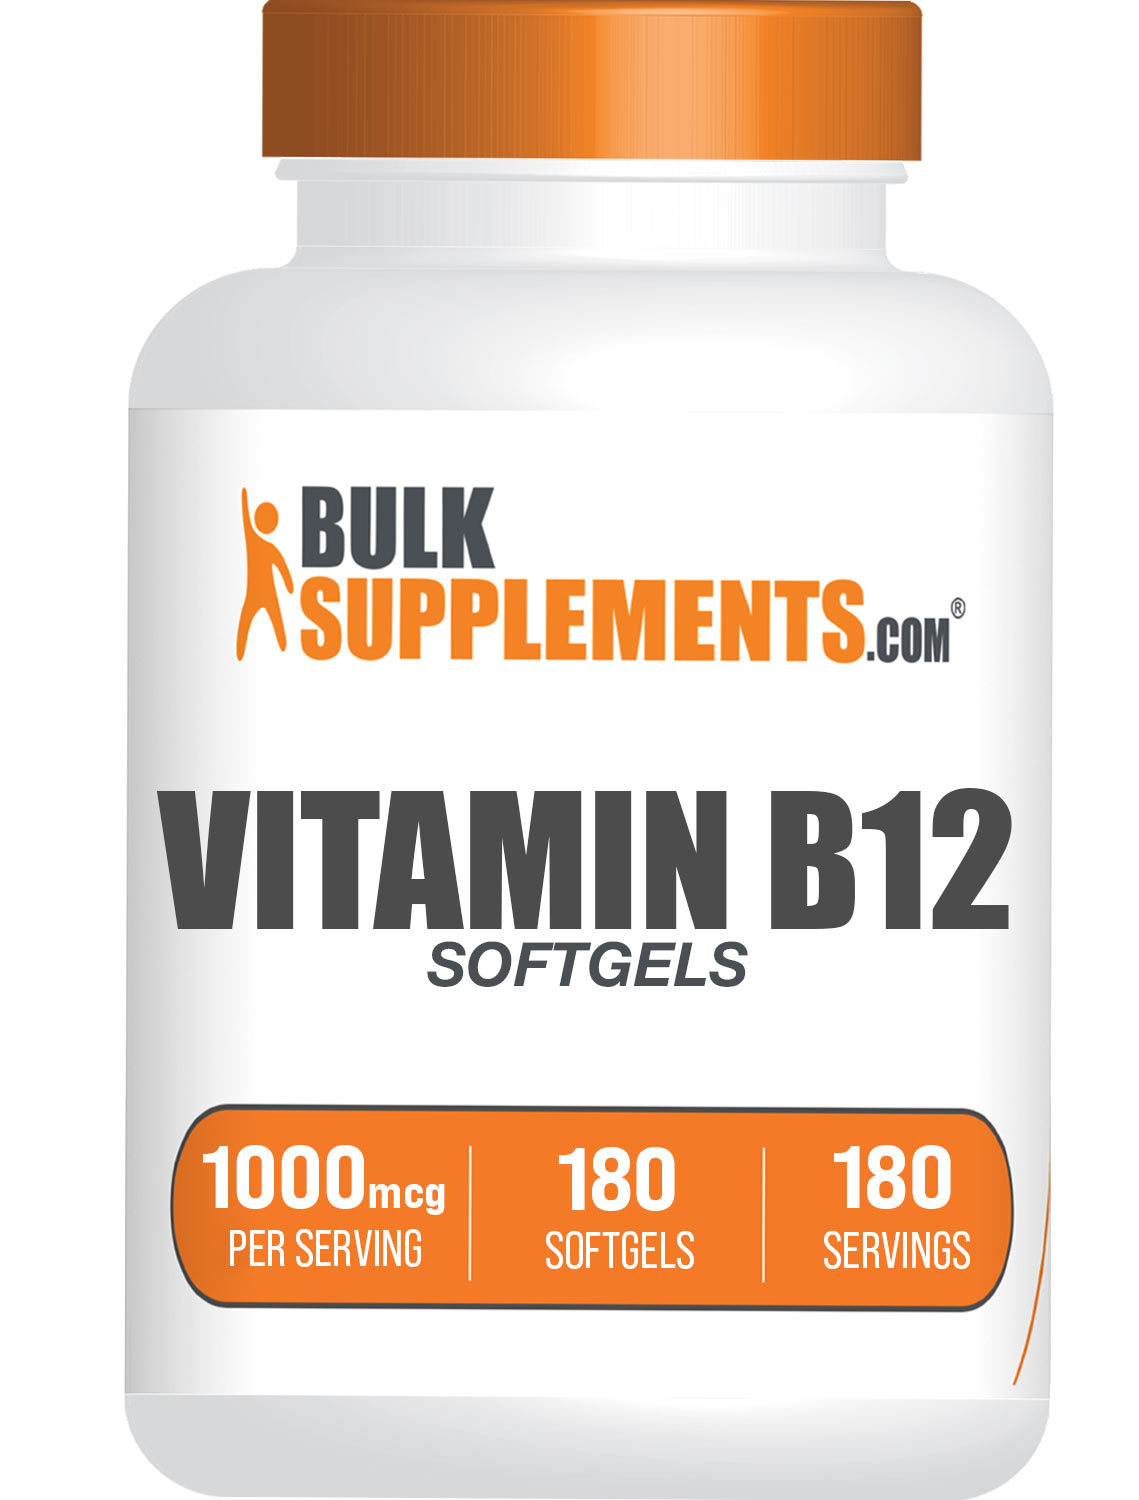 BulkSupplements.com Vitamin B12 Softgels 1000mcg 180 Softgels Bottle